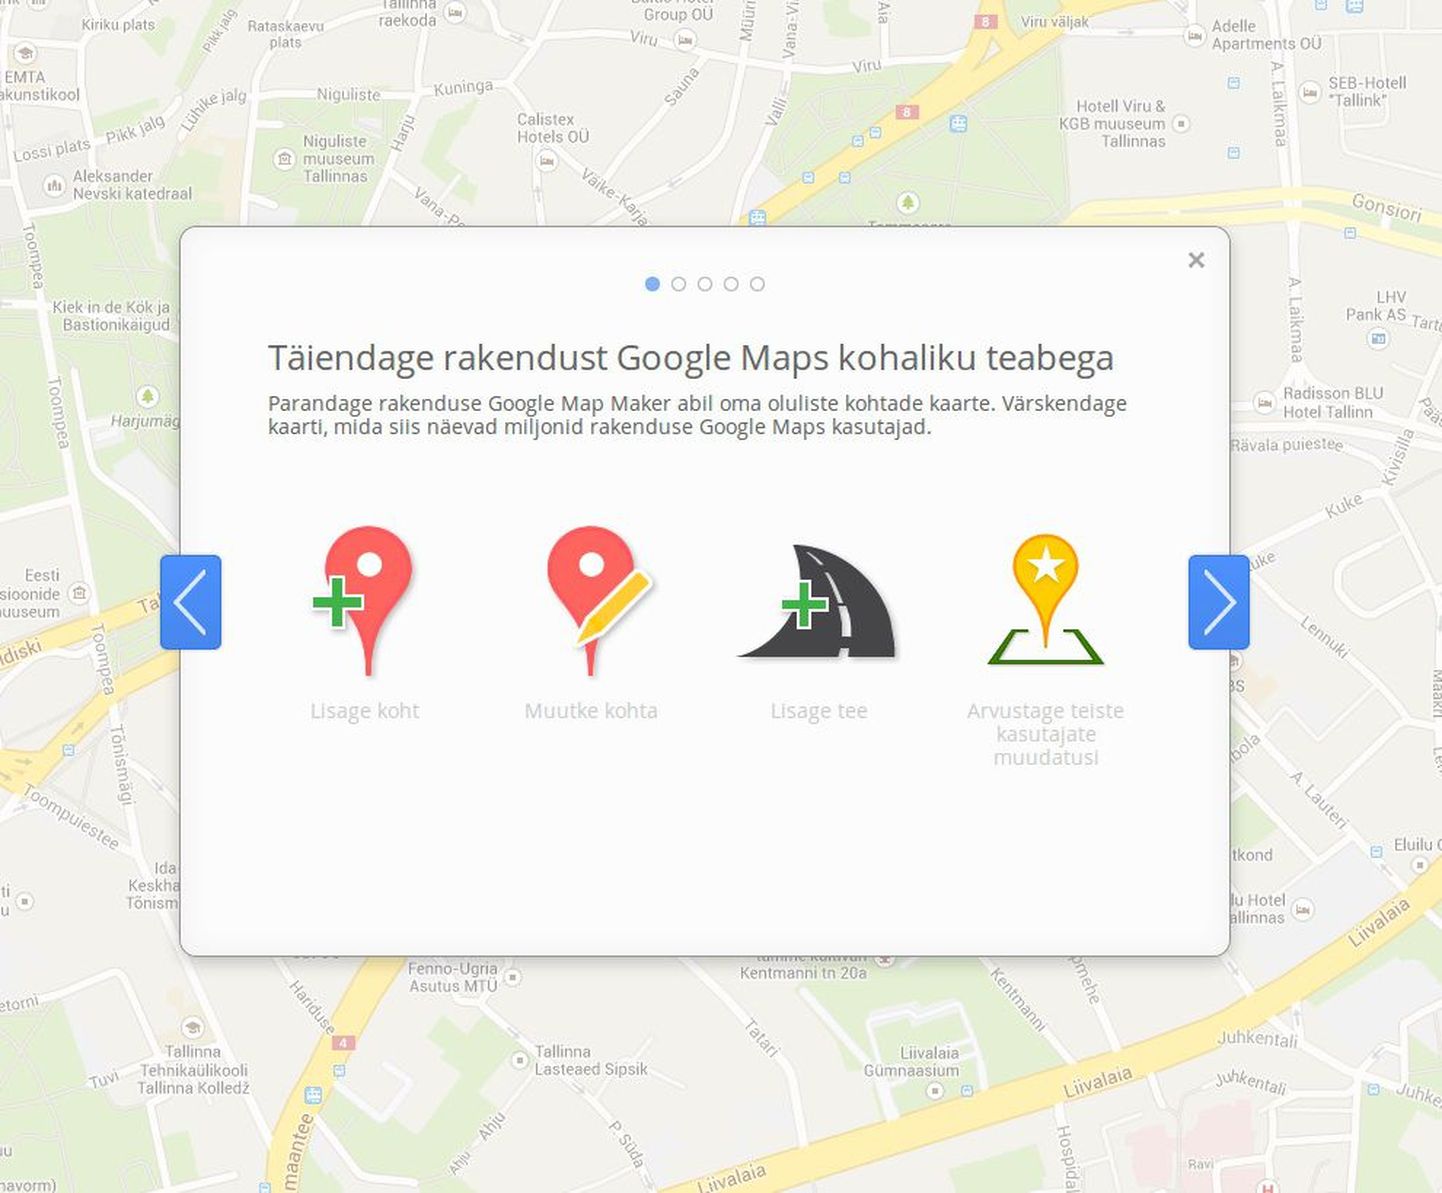 Google Map Maker